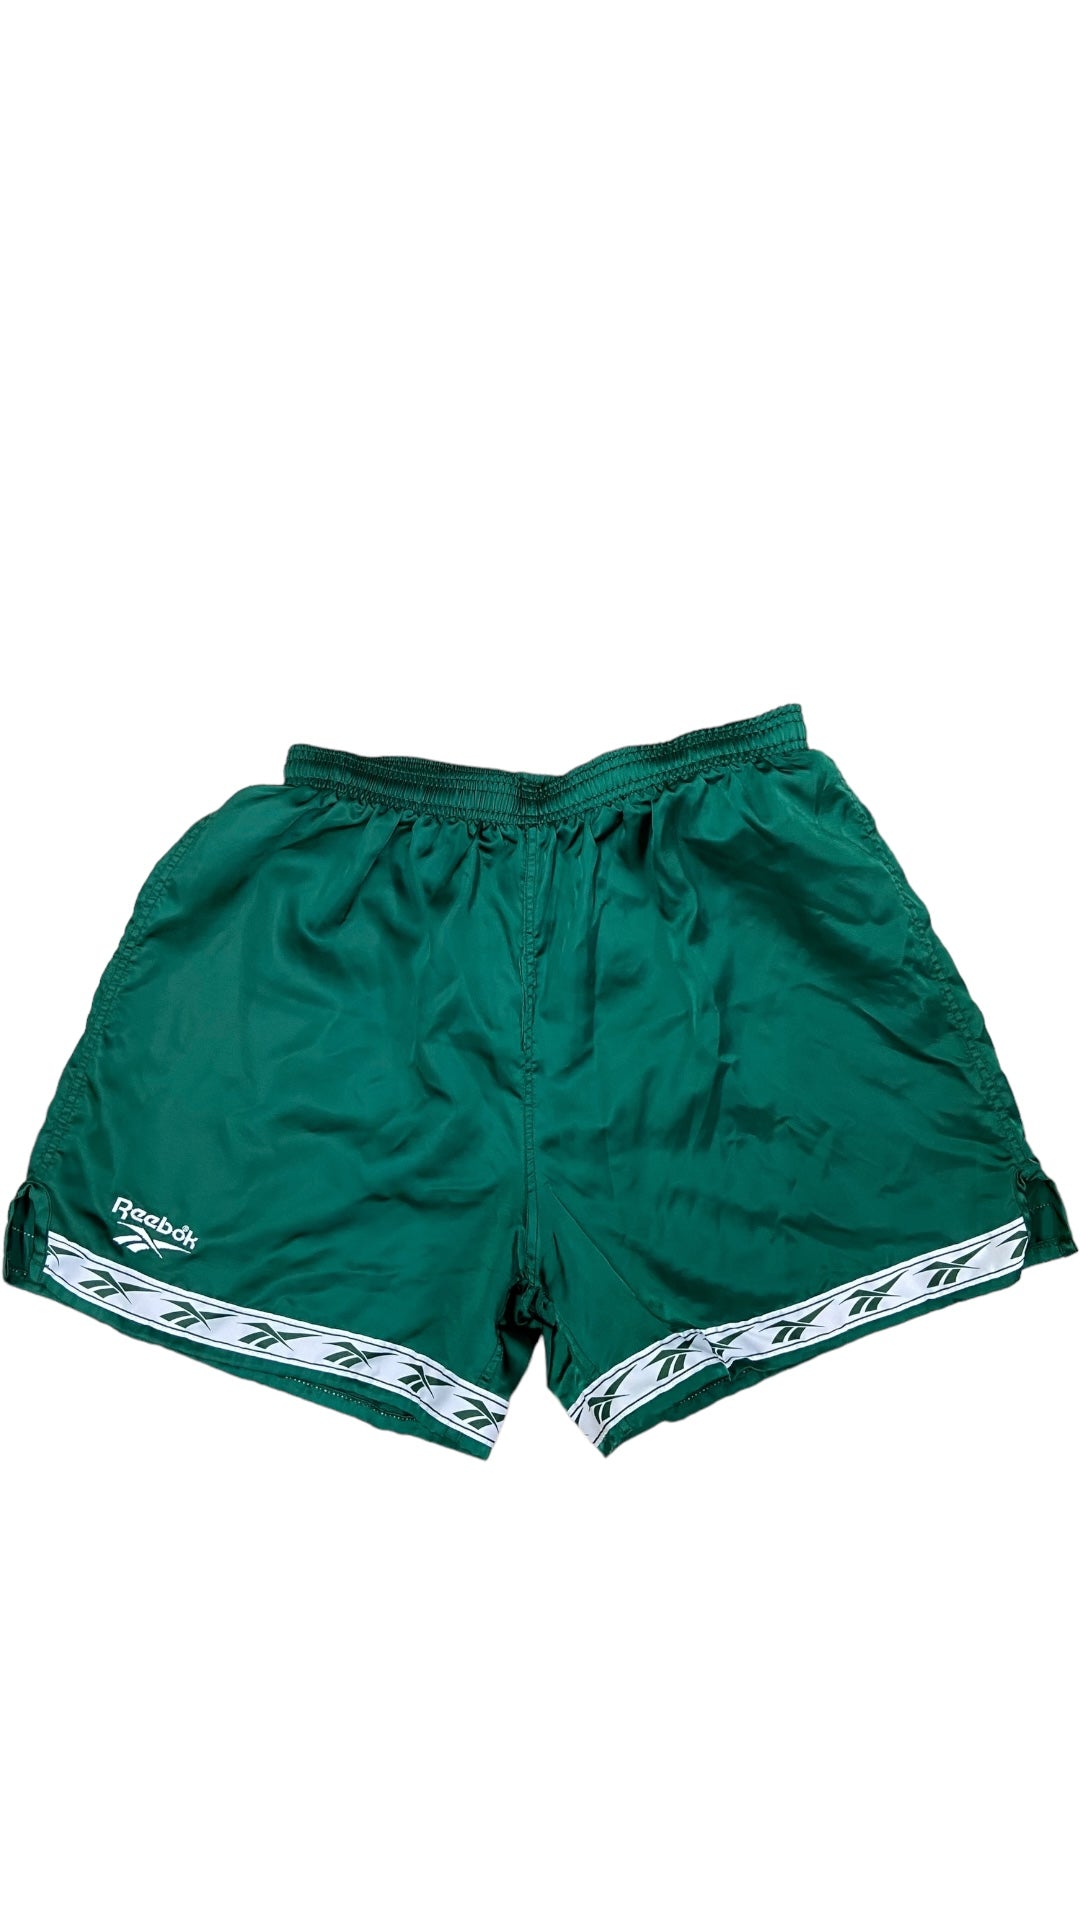 VTG Reebok Green Shorts Sz M